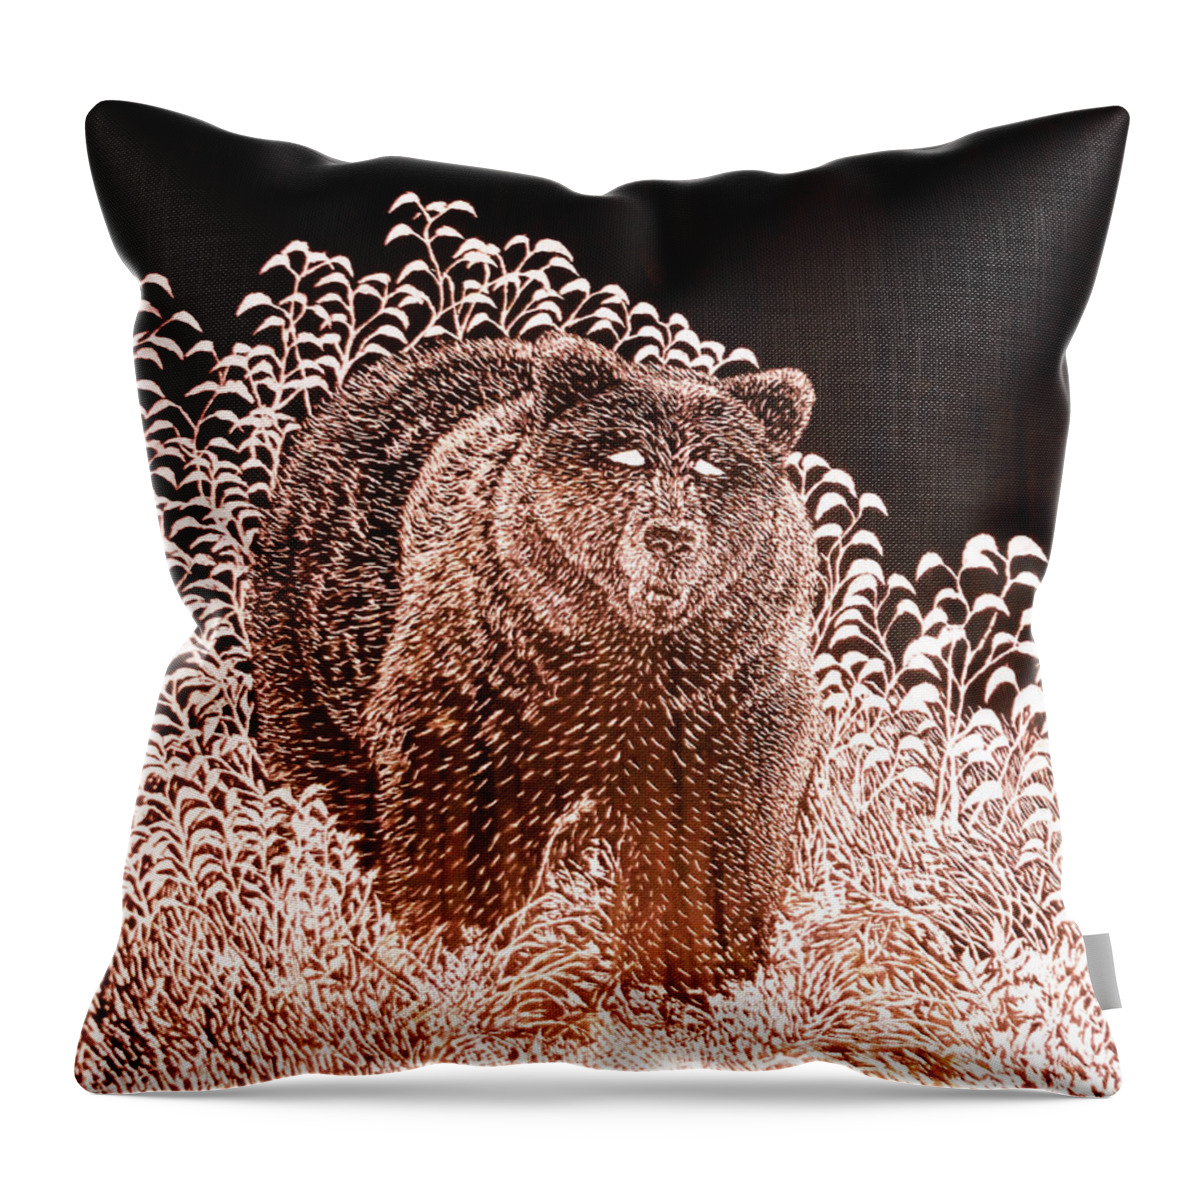 Black Bear Throw Pillow featuring the digital art Black Bear II by Sherry Bunker